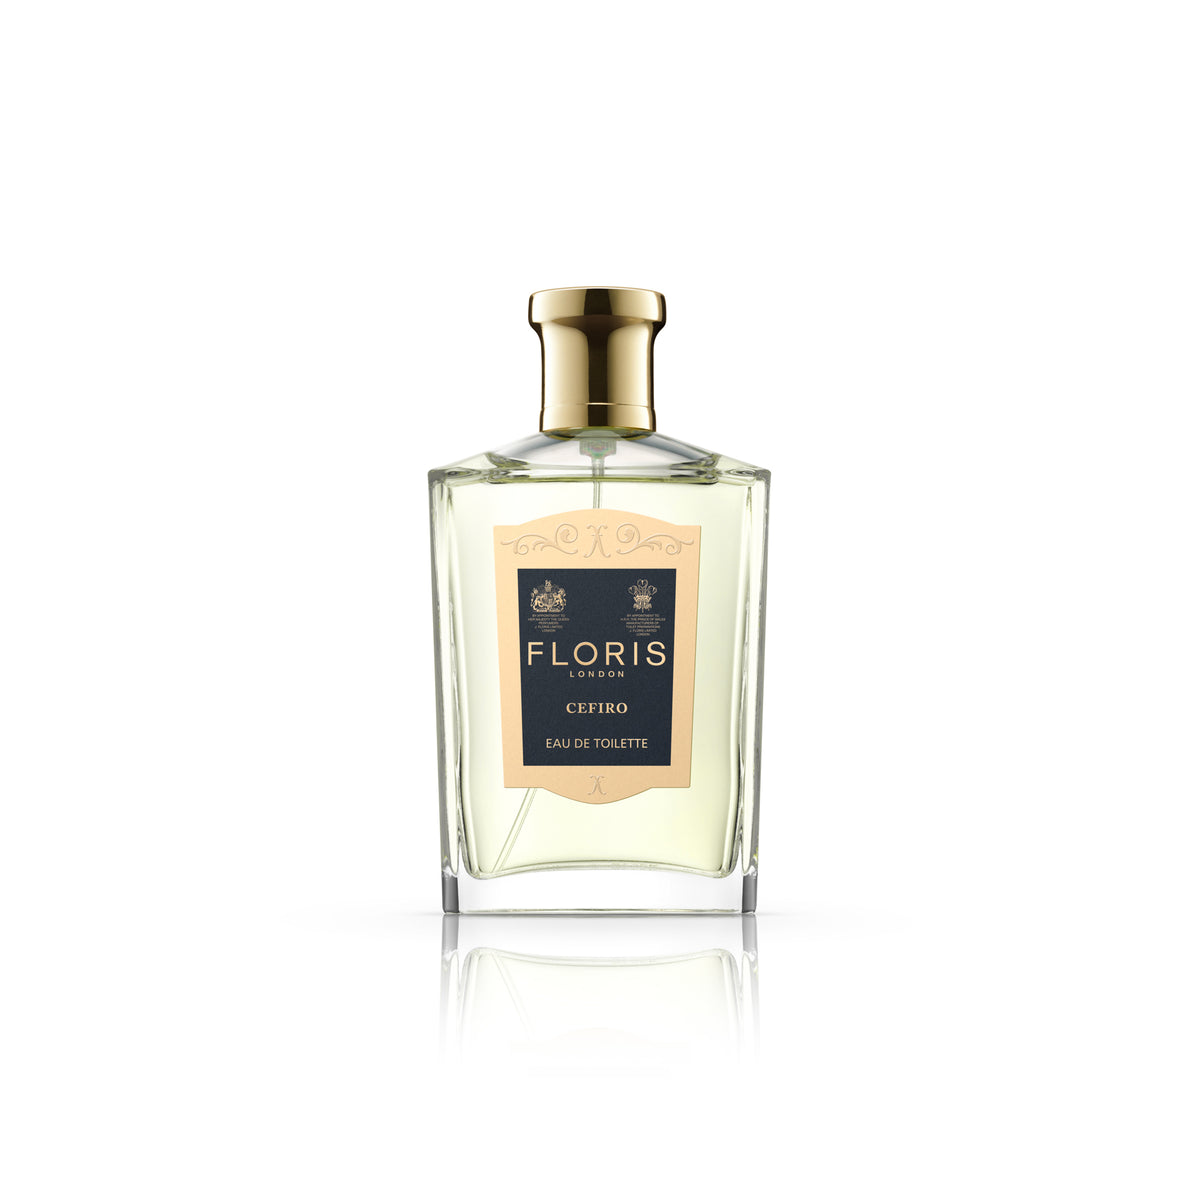 A bottle of FLORIS Cefiro 100 ML fragrance by KirbyAllison.com on a white background.